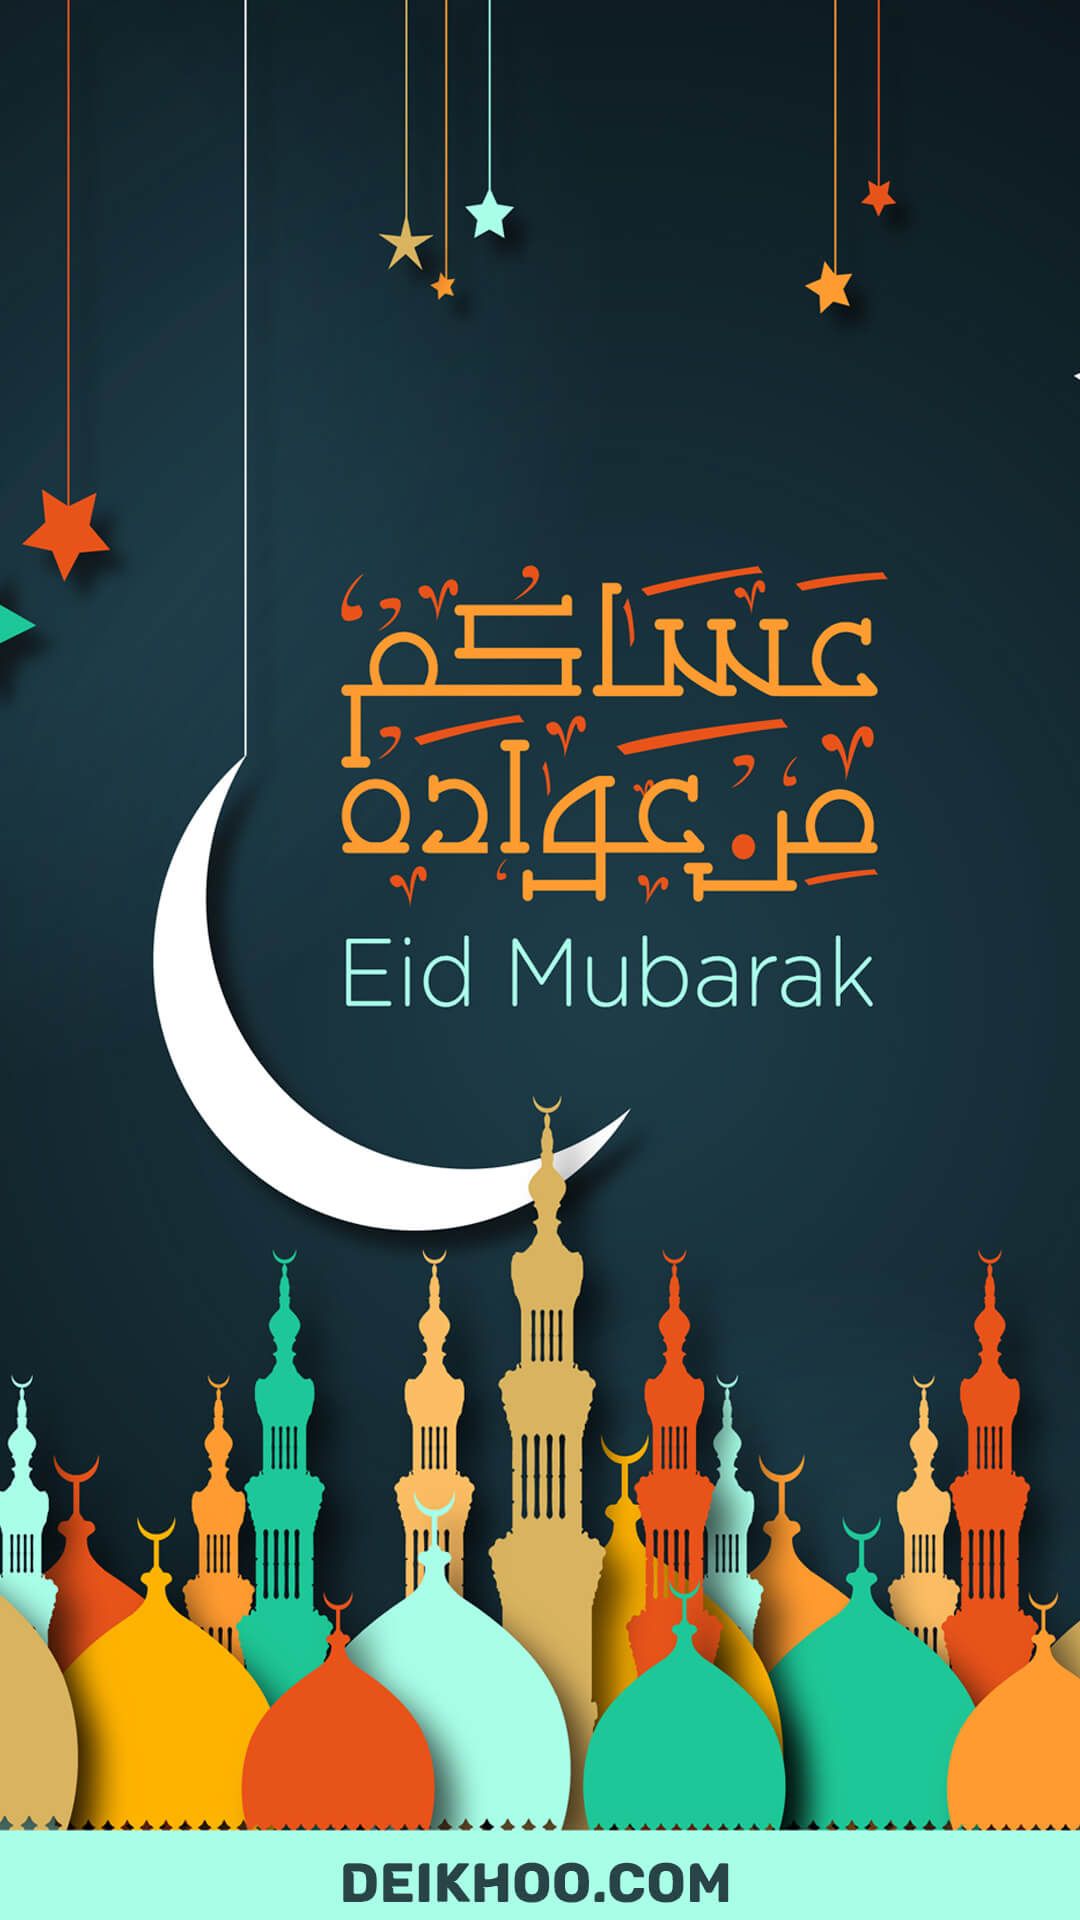 Happy Eid Mubarak 2019 Wallpaper Pics Image Cards Eid Al Adha